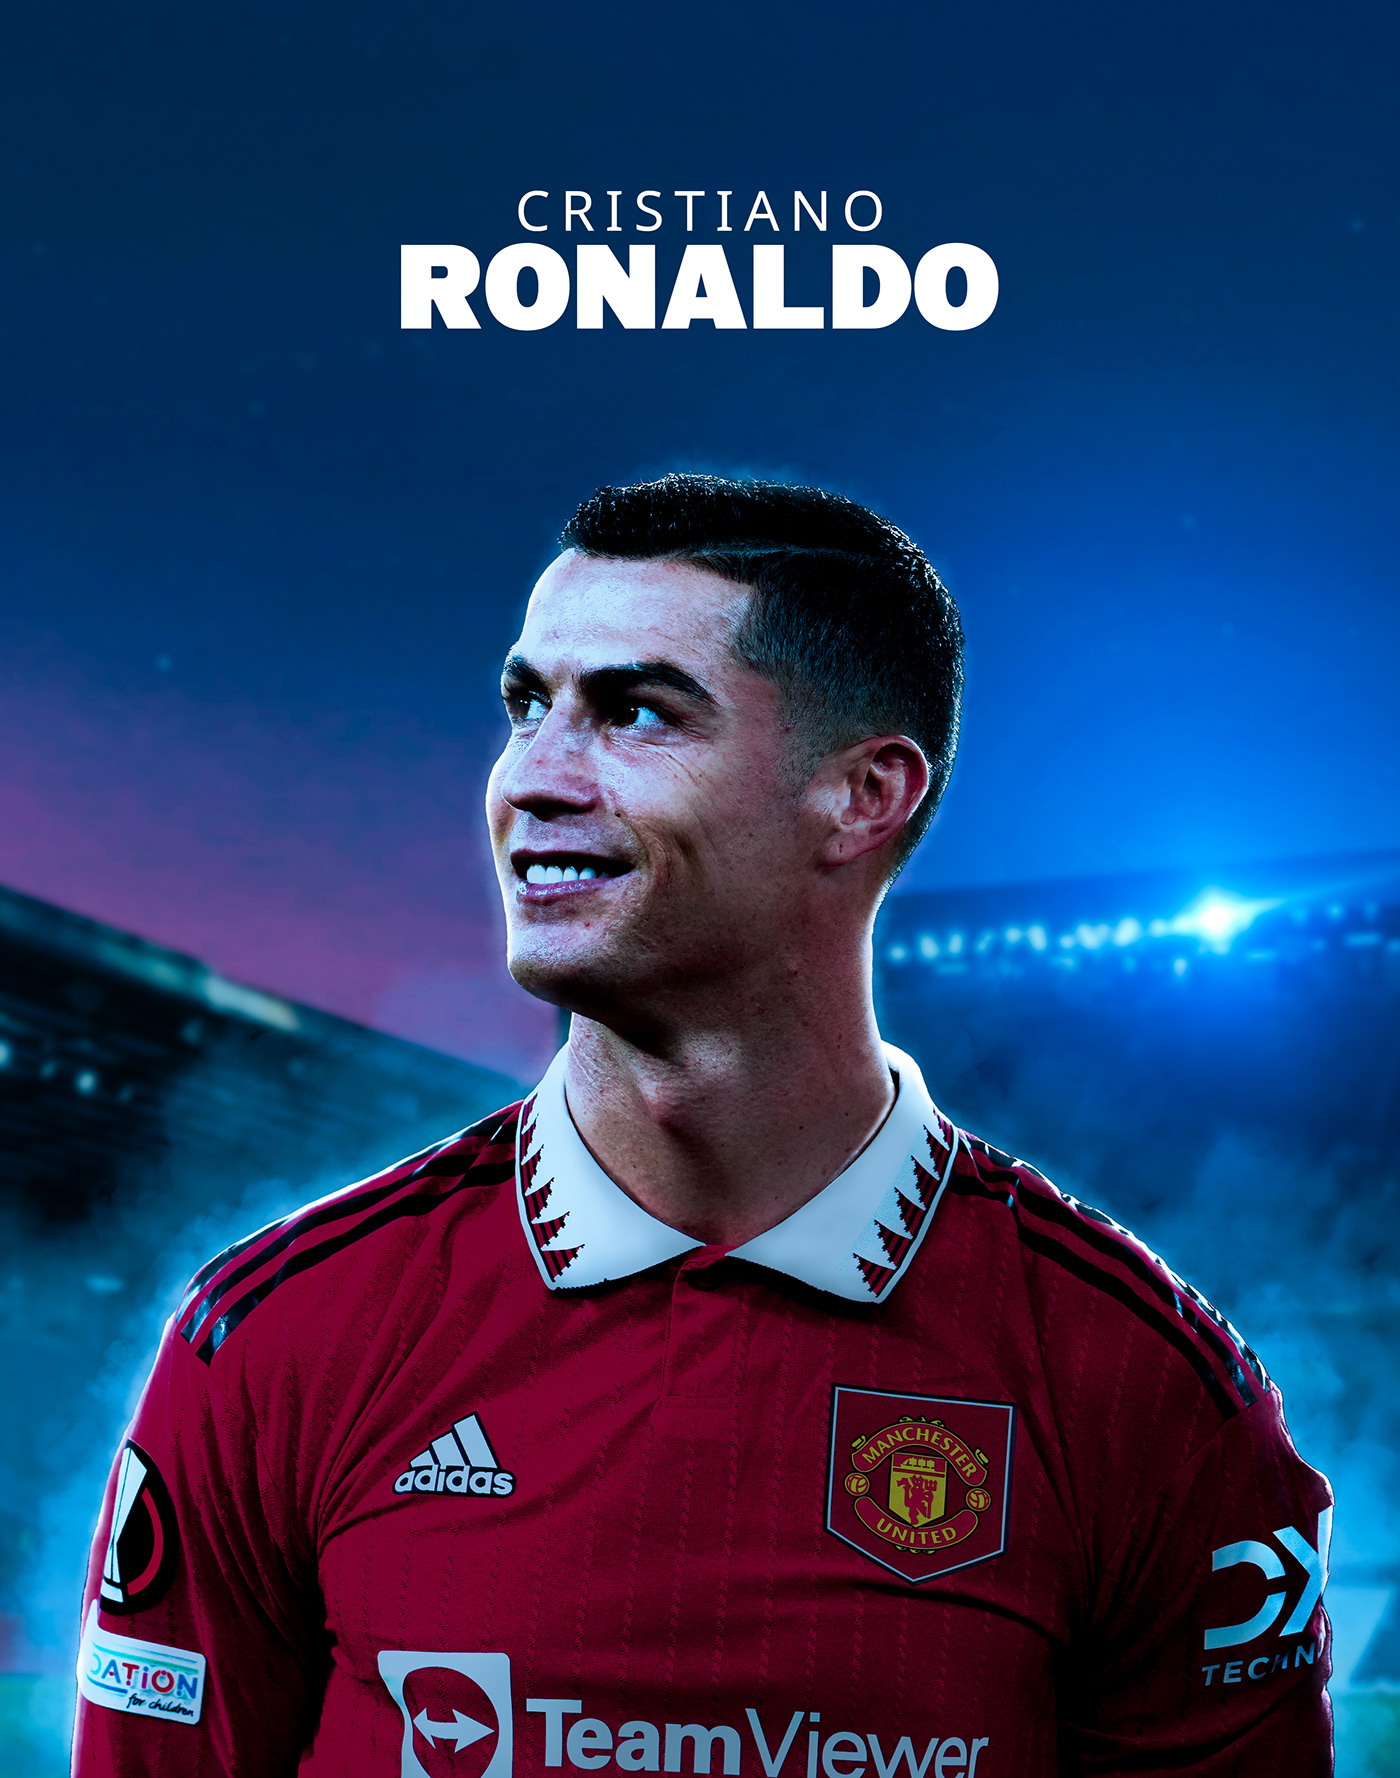 Cristiano Ronaldo - Football Poster on Behance